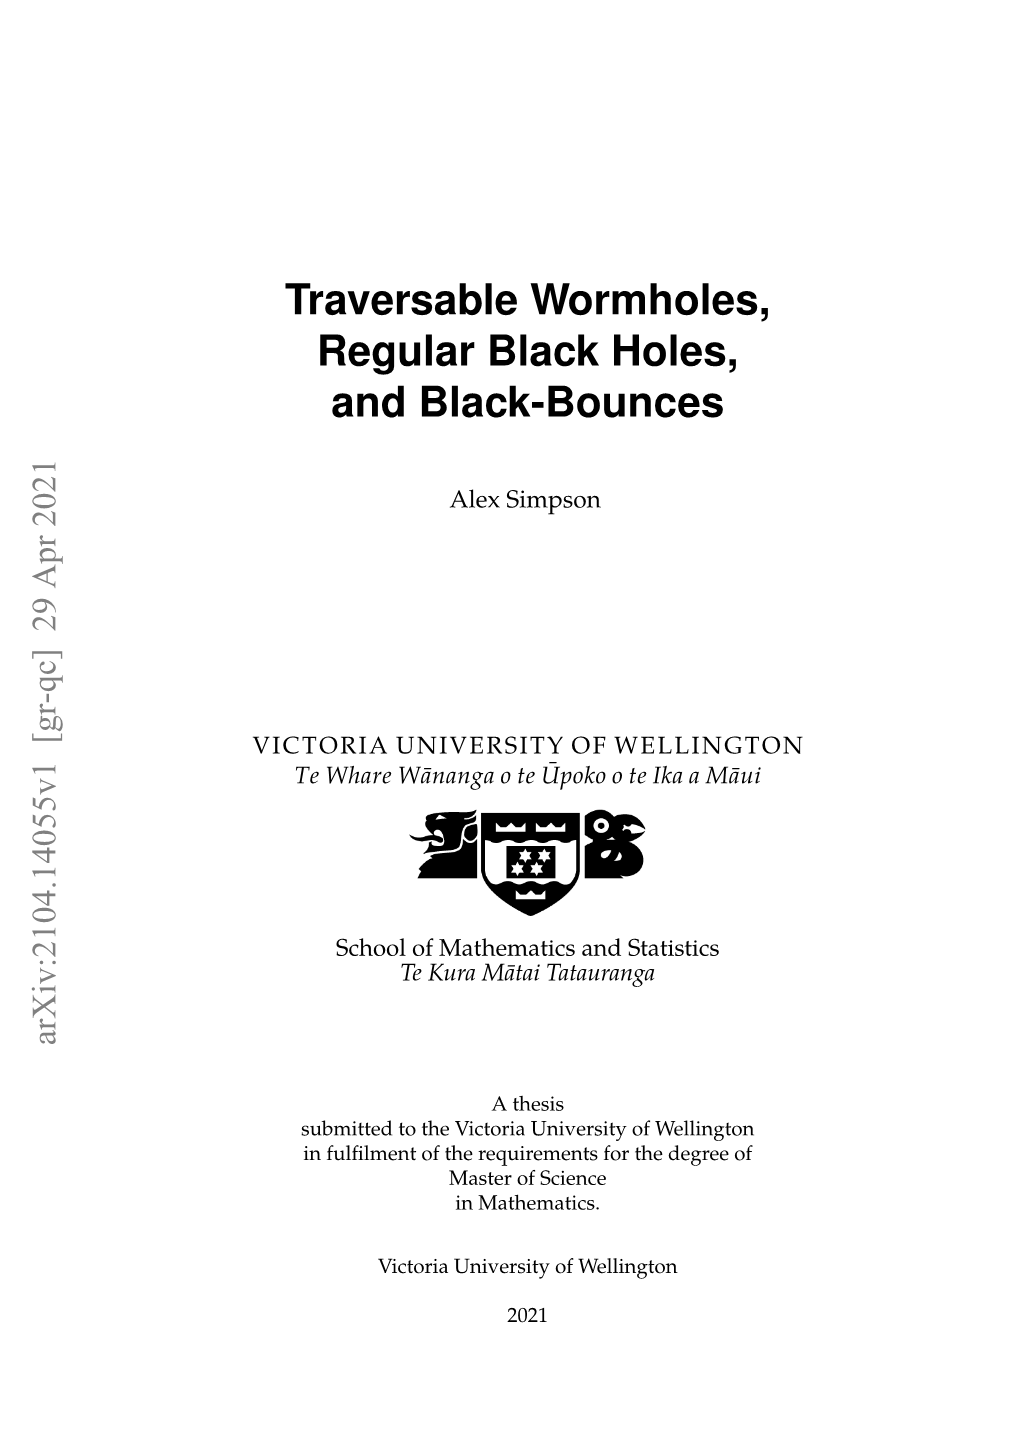 Traversable Wormholes, Regular Black Holes, and Black-Bounces